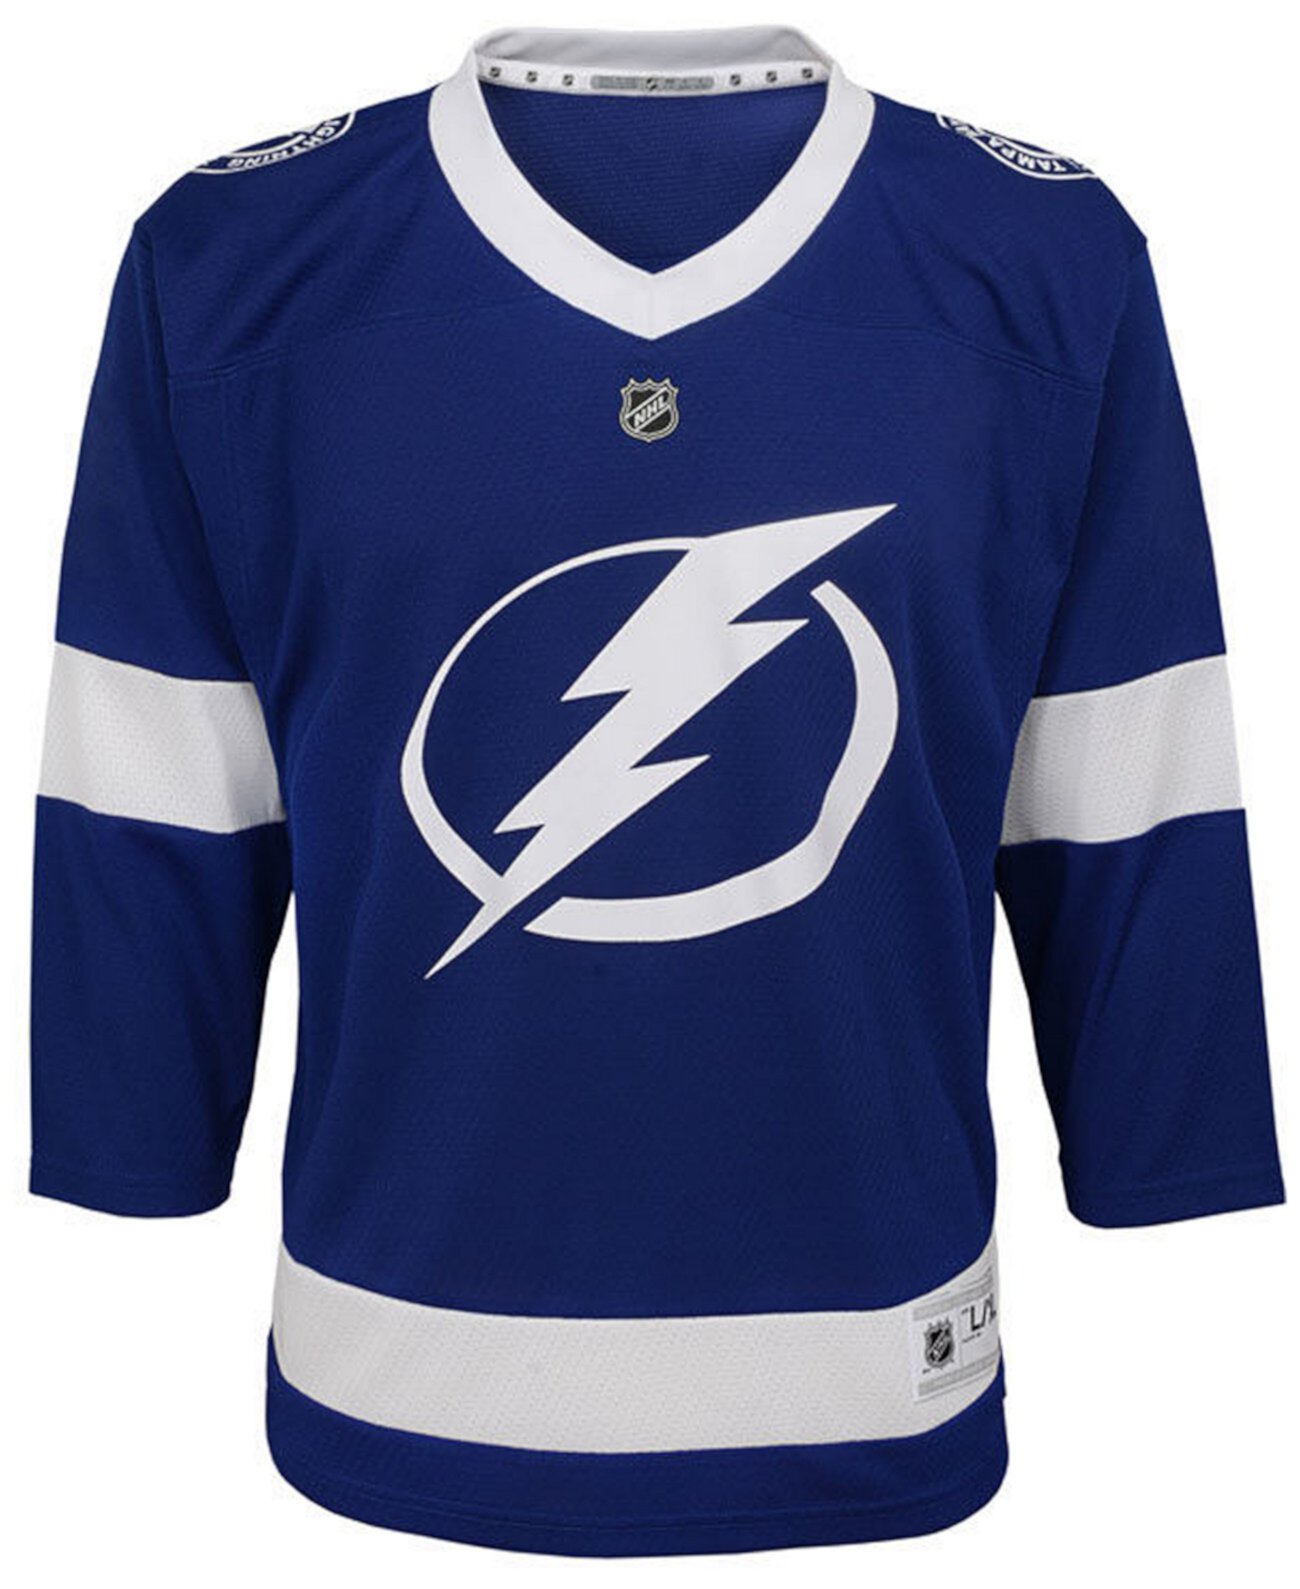 Джерси Tampa Bay Lightning Blank, для младенцев (от 12 до 24 месяцев) Authentic NHL Apparel